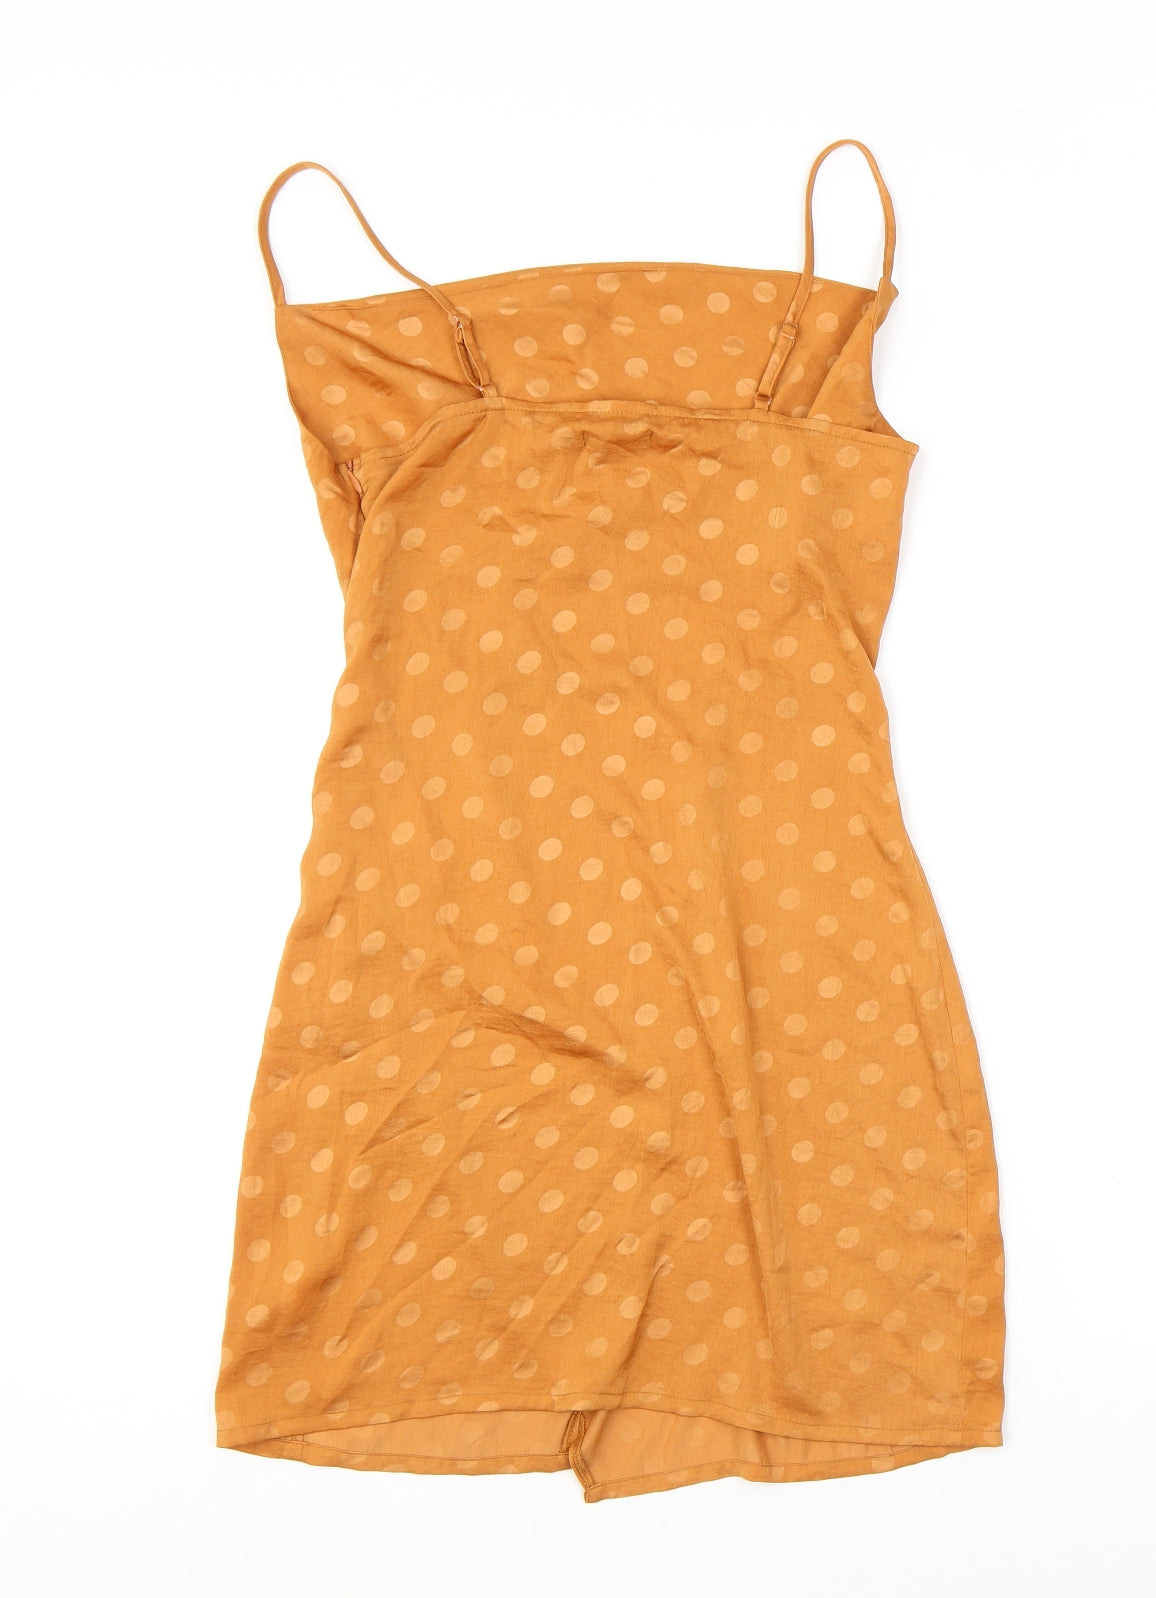 Nasty Gal Womens Orange Polka Dot Polyester Slip Dress Size 8 Cowl Neck Pullover